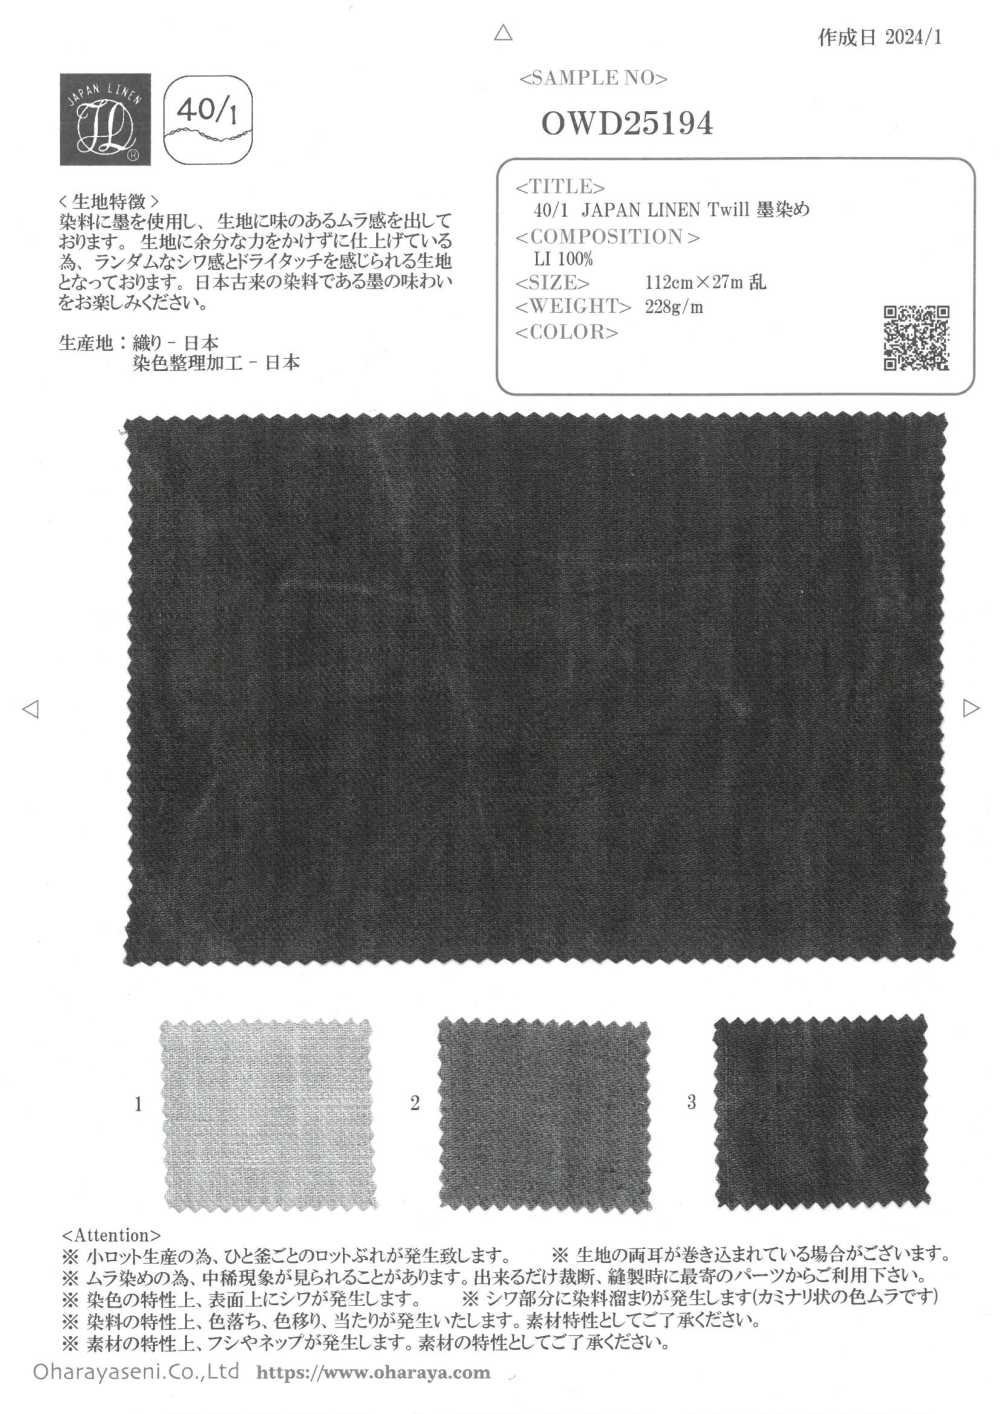 OWD25194 40/1 JAPAN LEINEN Twill Tinte Gefärbt[Textilgewebe] Oharayaseni